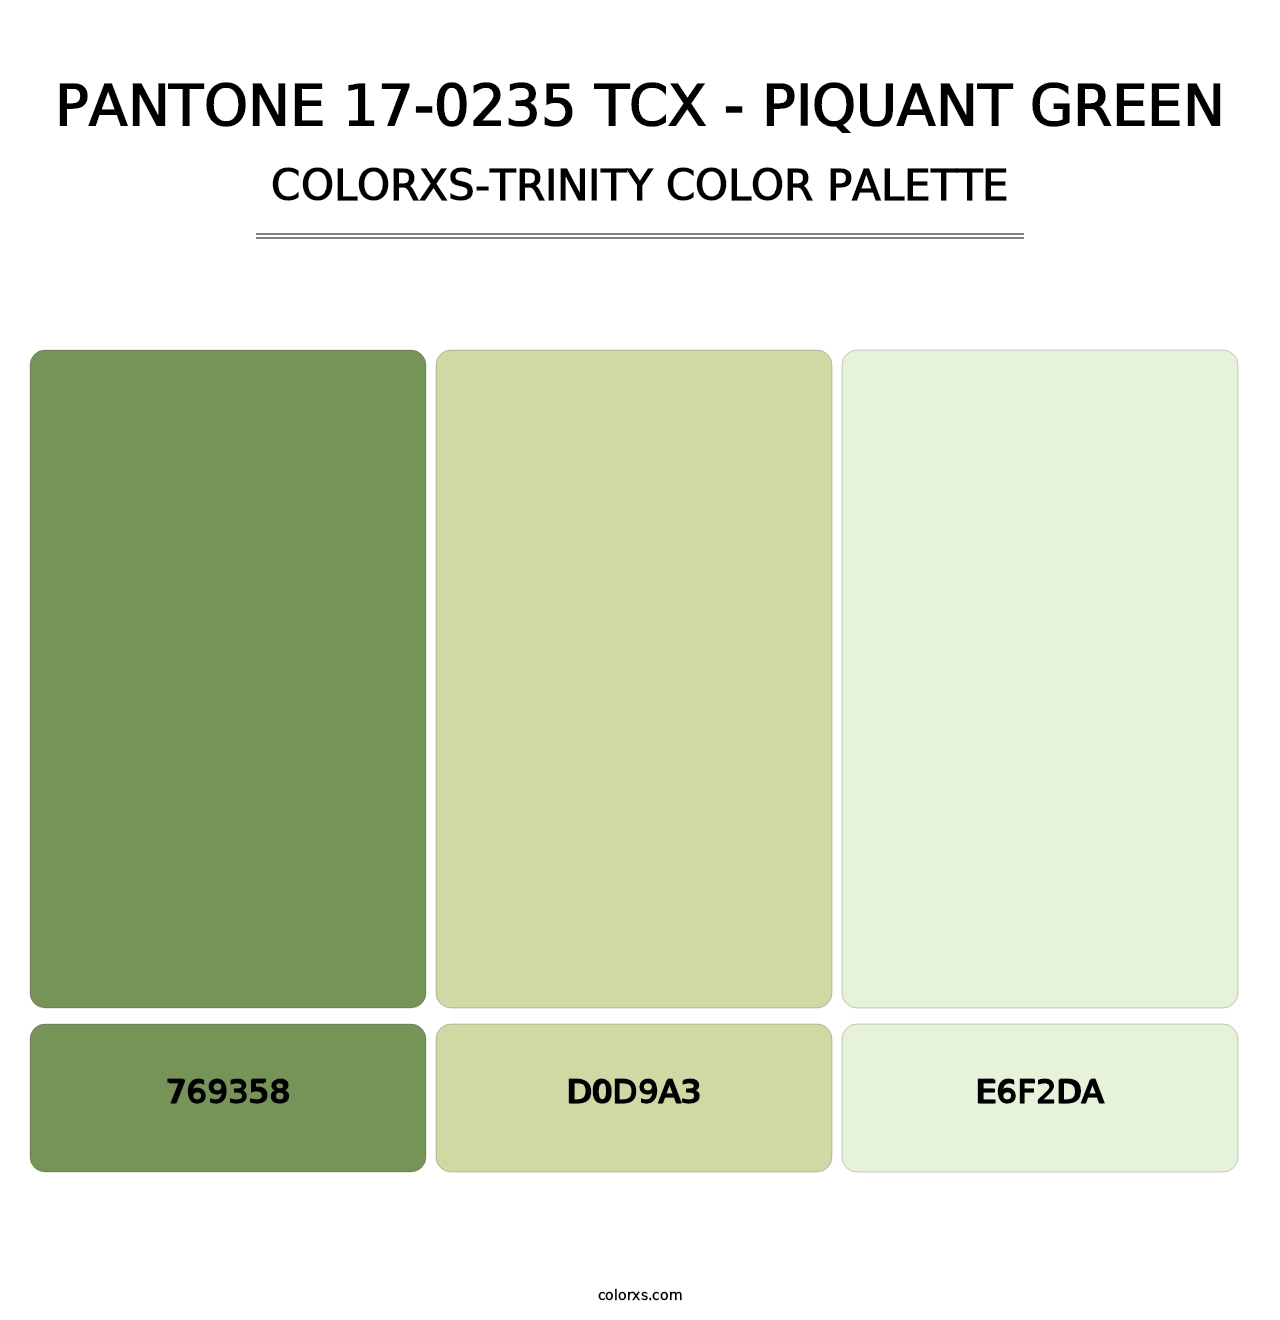 PANTONE 17-0235 TCX - Piquant Green - Colorxs Trinity Palette